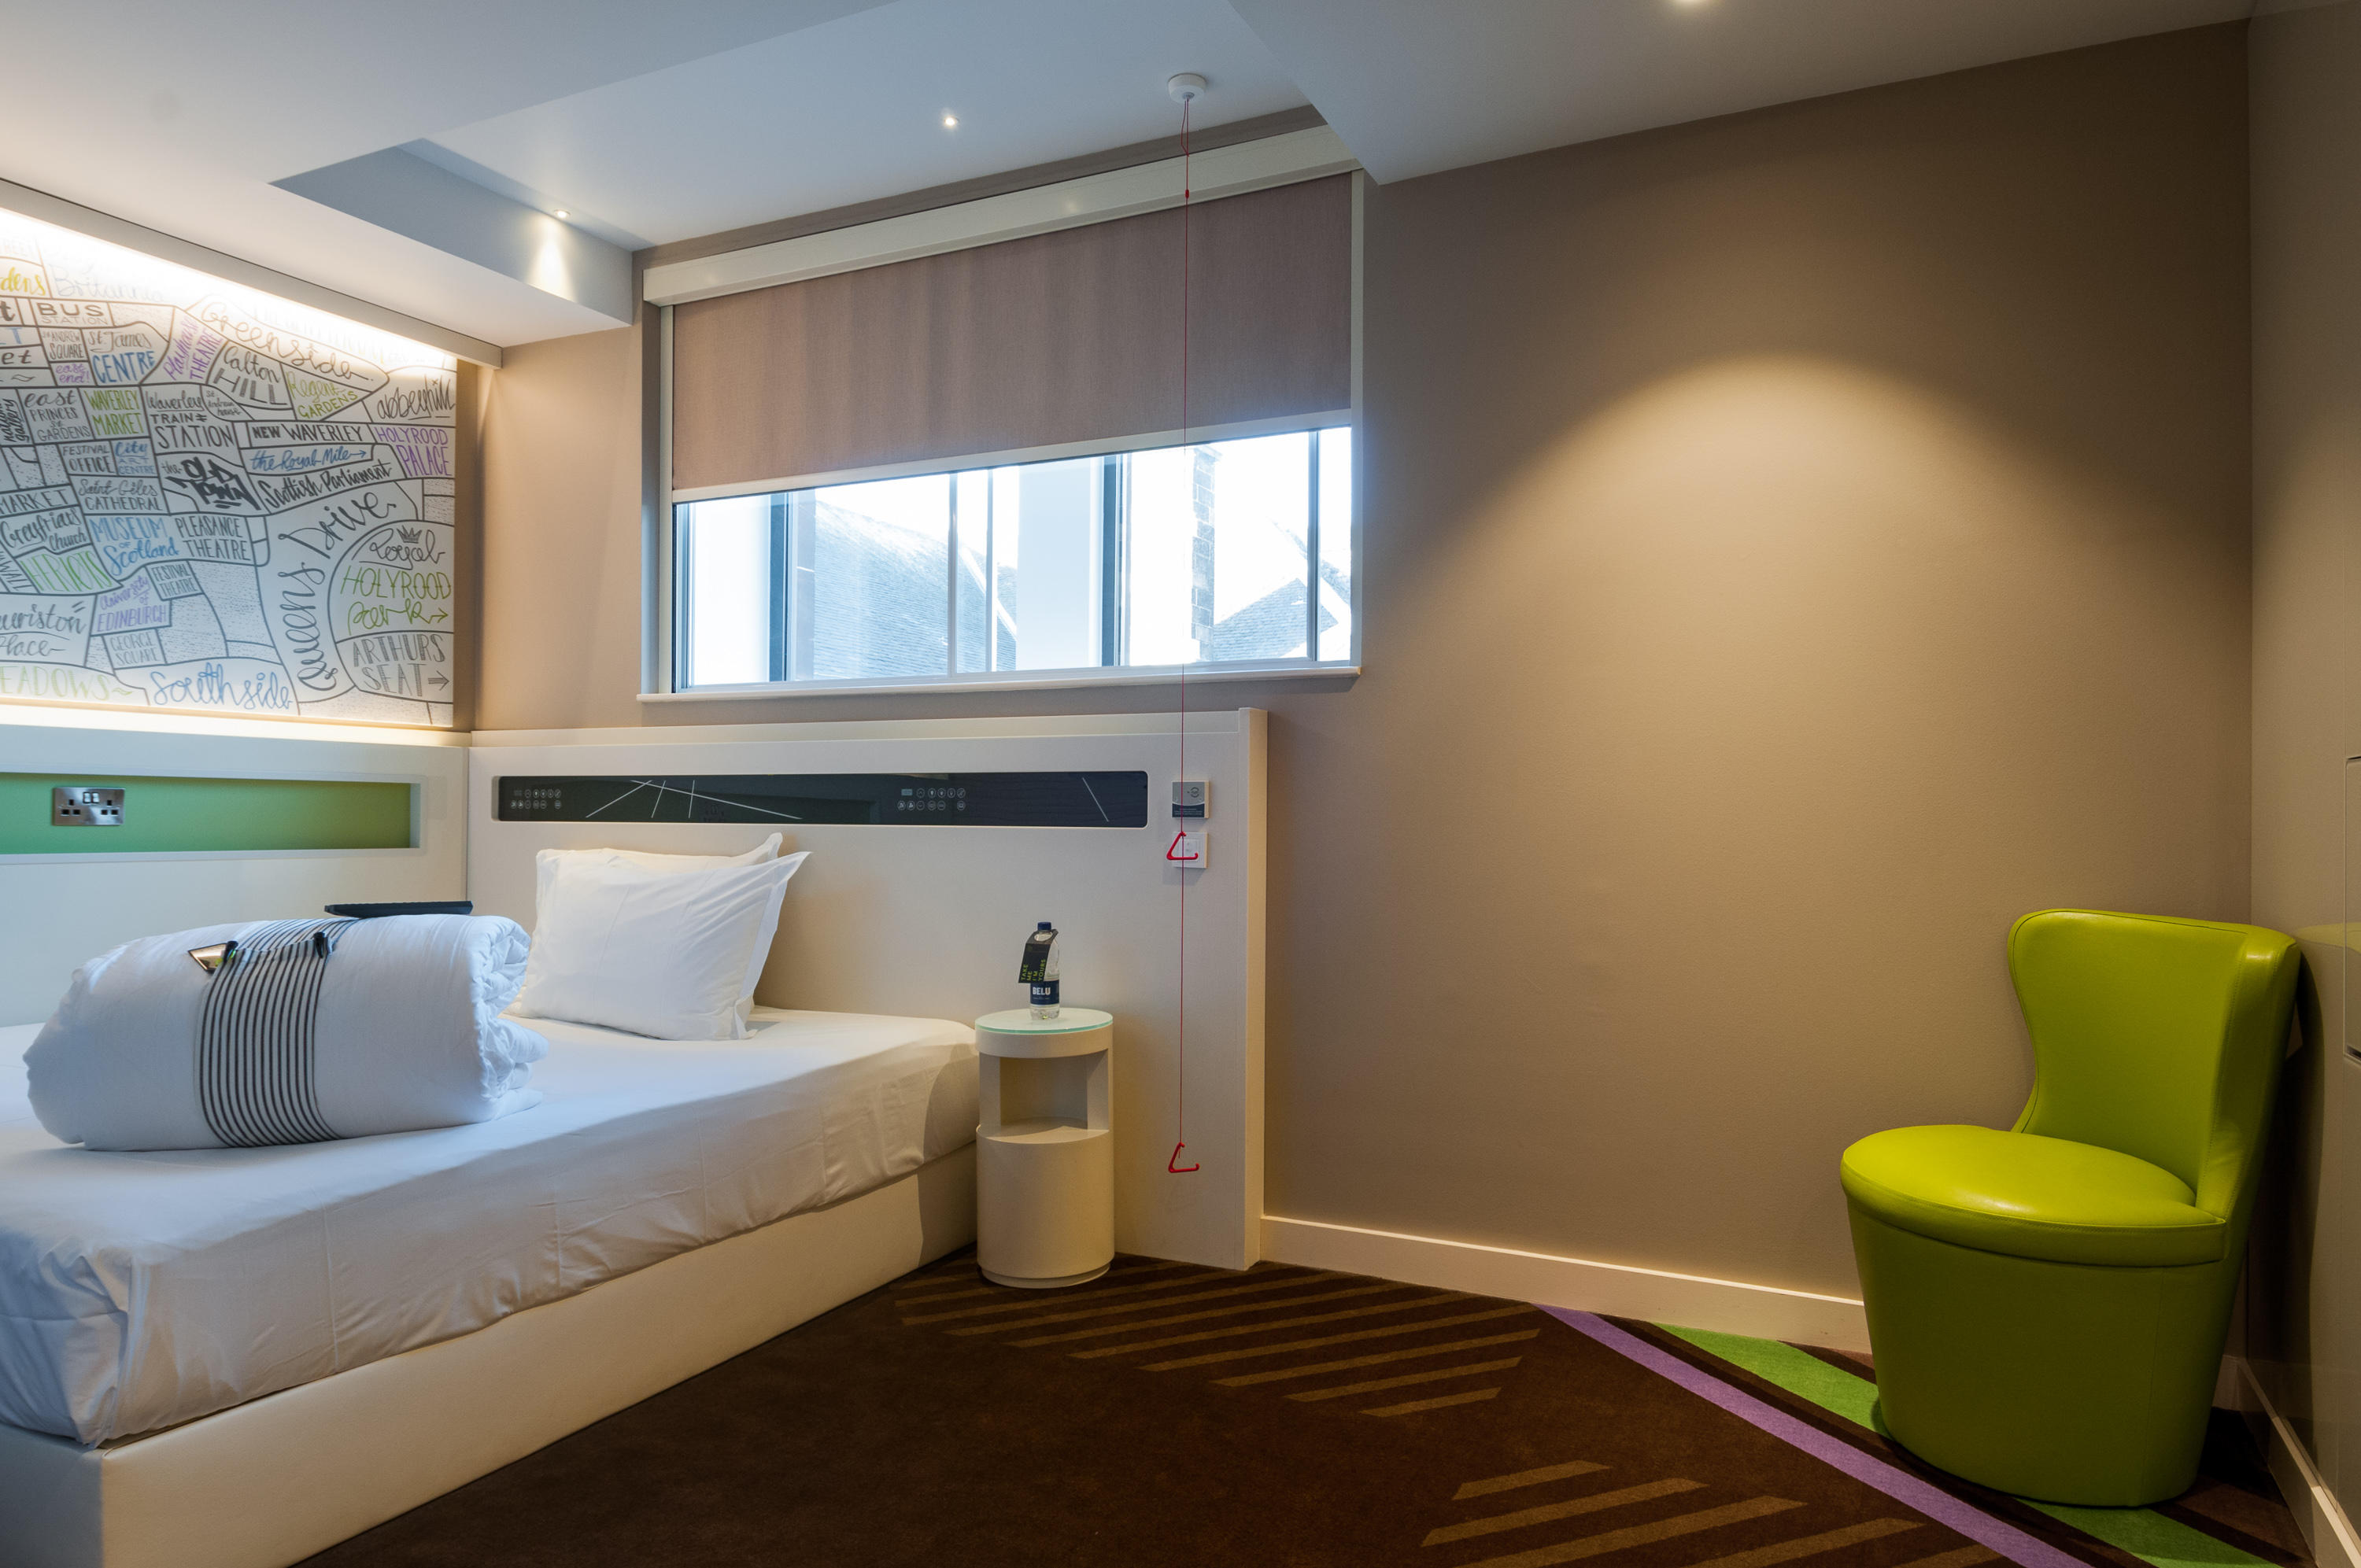 hub by Premier Inn accessible room hub by Premier Inn London Goodge Street hotel London 03333 213104